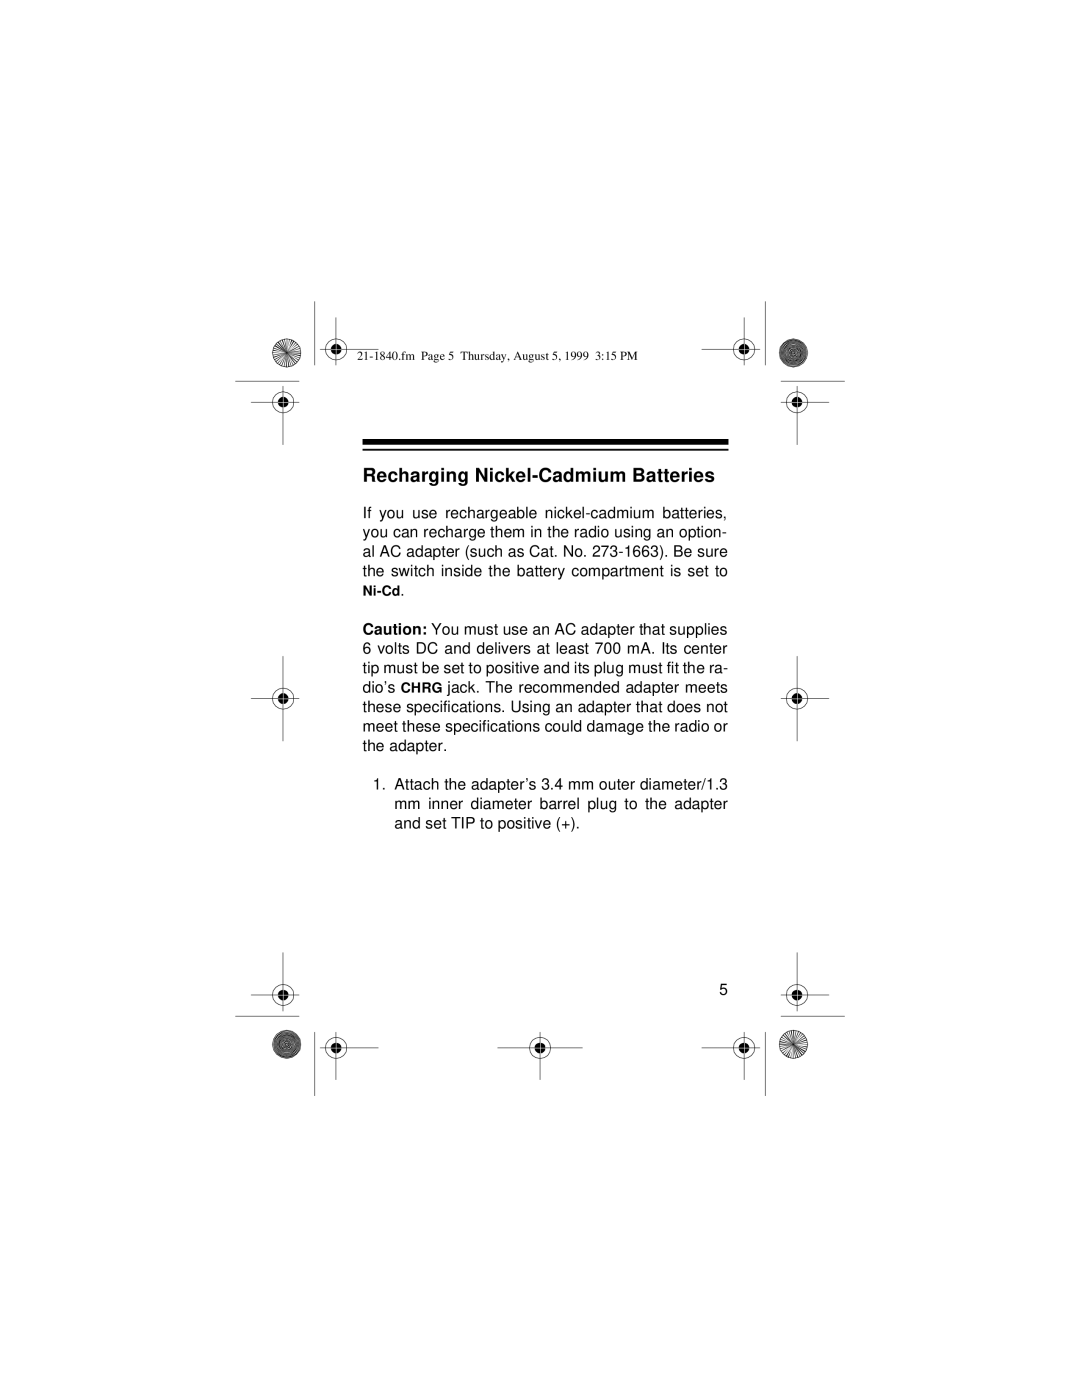 Radio Shack 21-1840 owner manual Recharging Nickel-CadmiumBatteries 